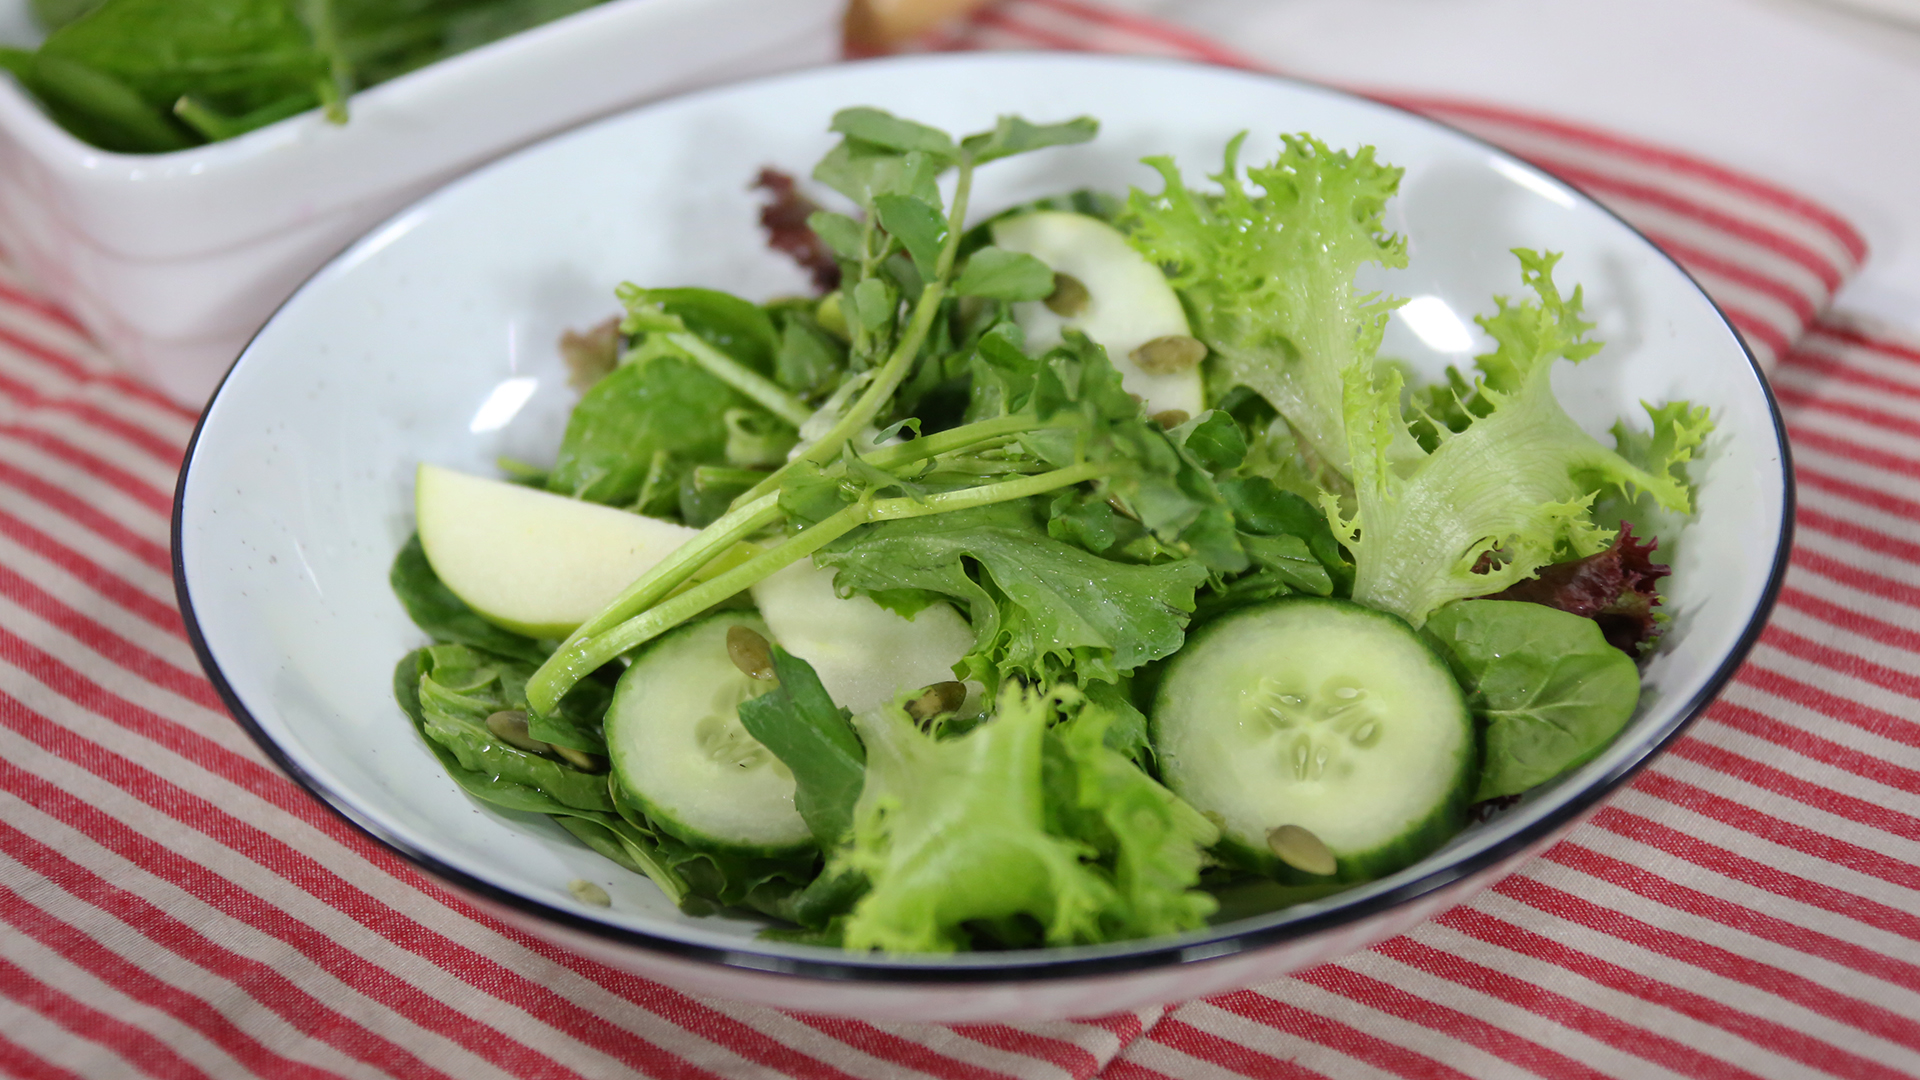 All-green salad